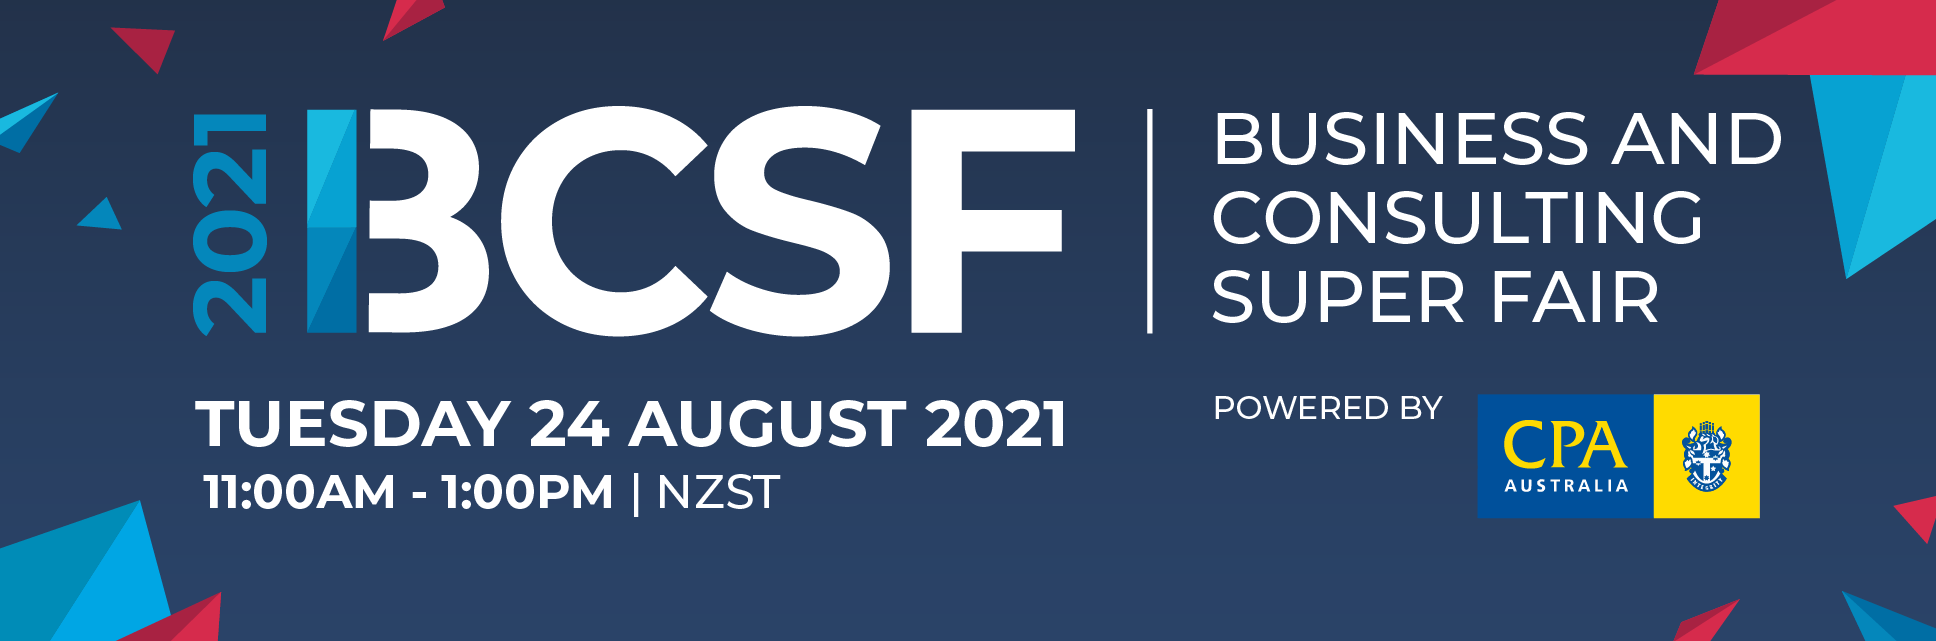 BCSF-NZ-640.png 